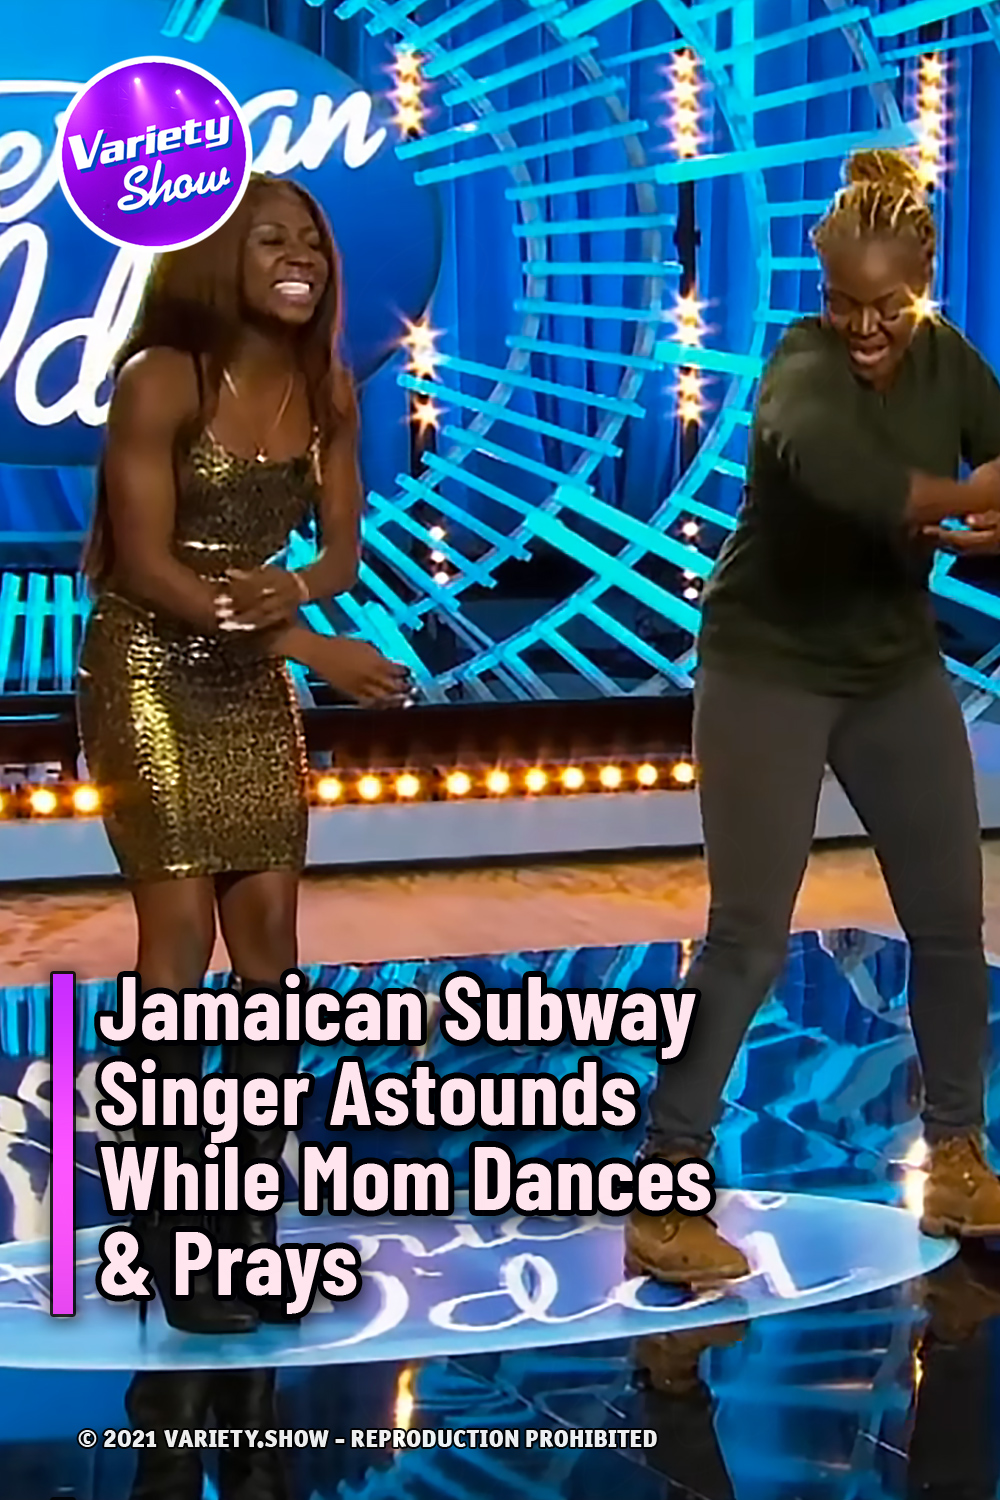 Jamaican Subway Singer Astounds While Mom Dances & Prays